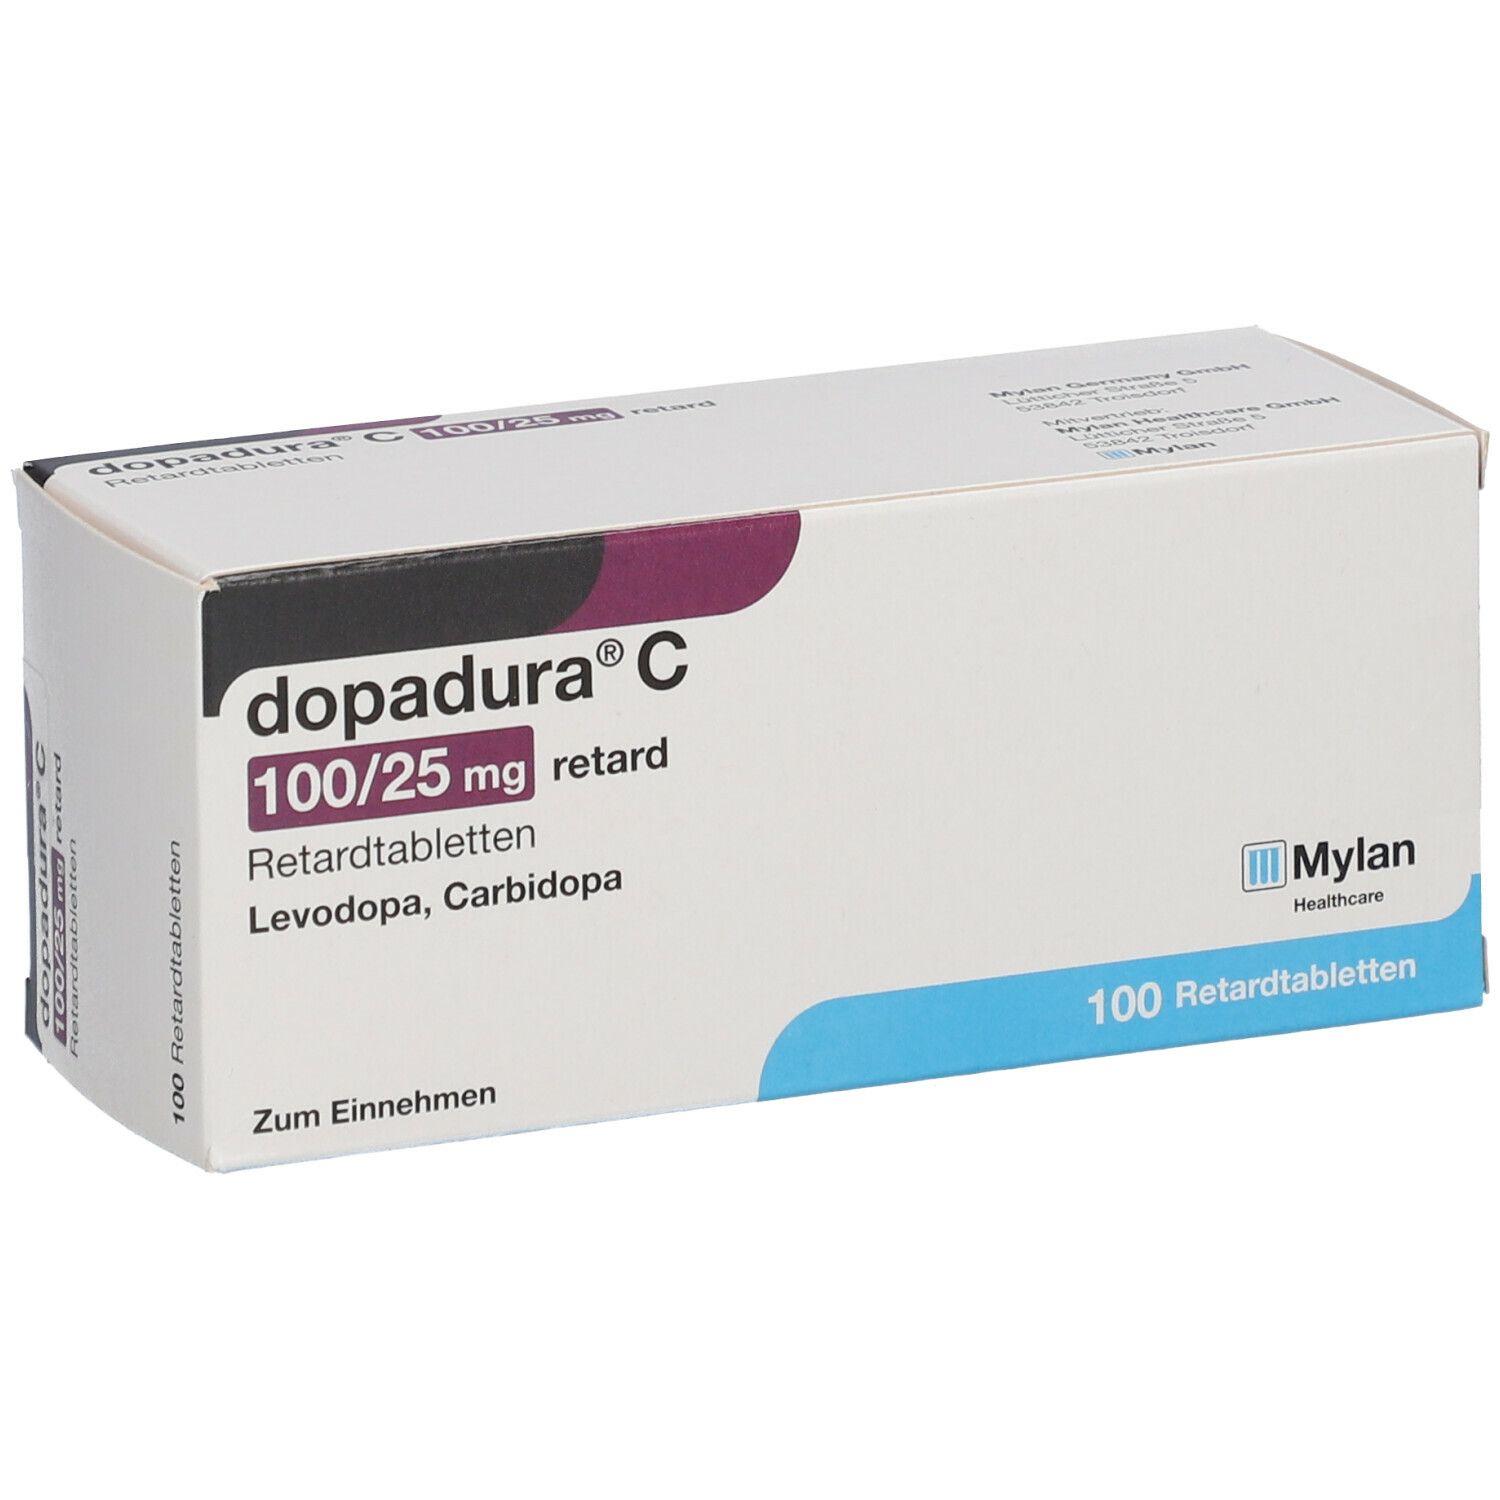 Dopadura® C 100/25 mg retard